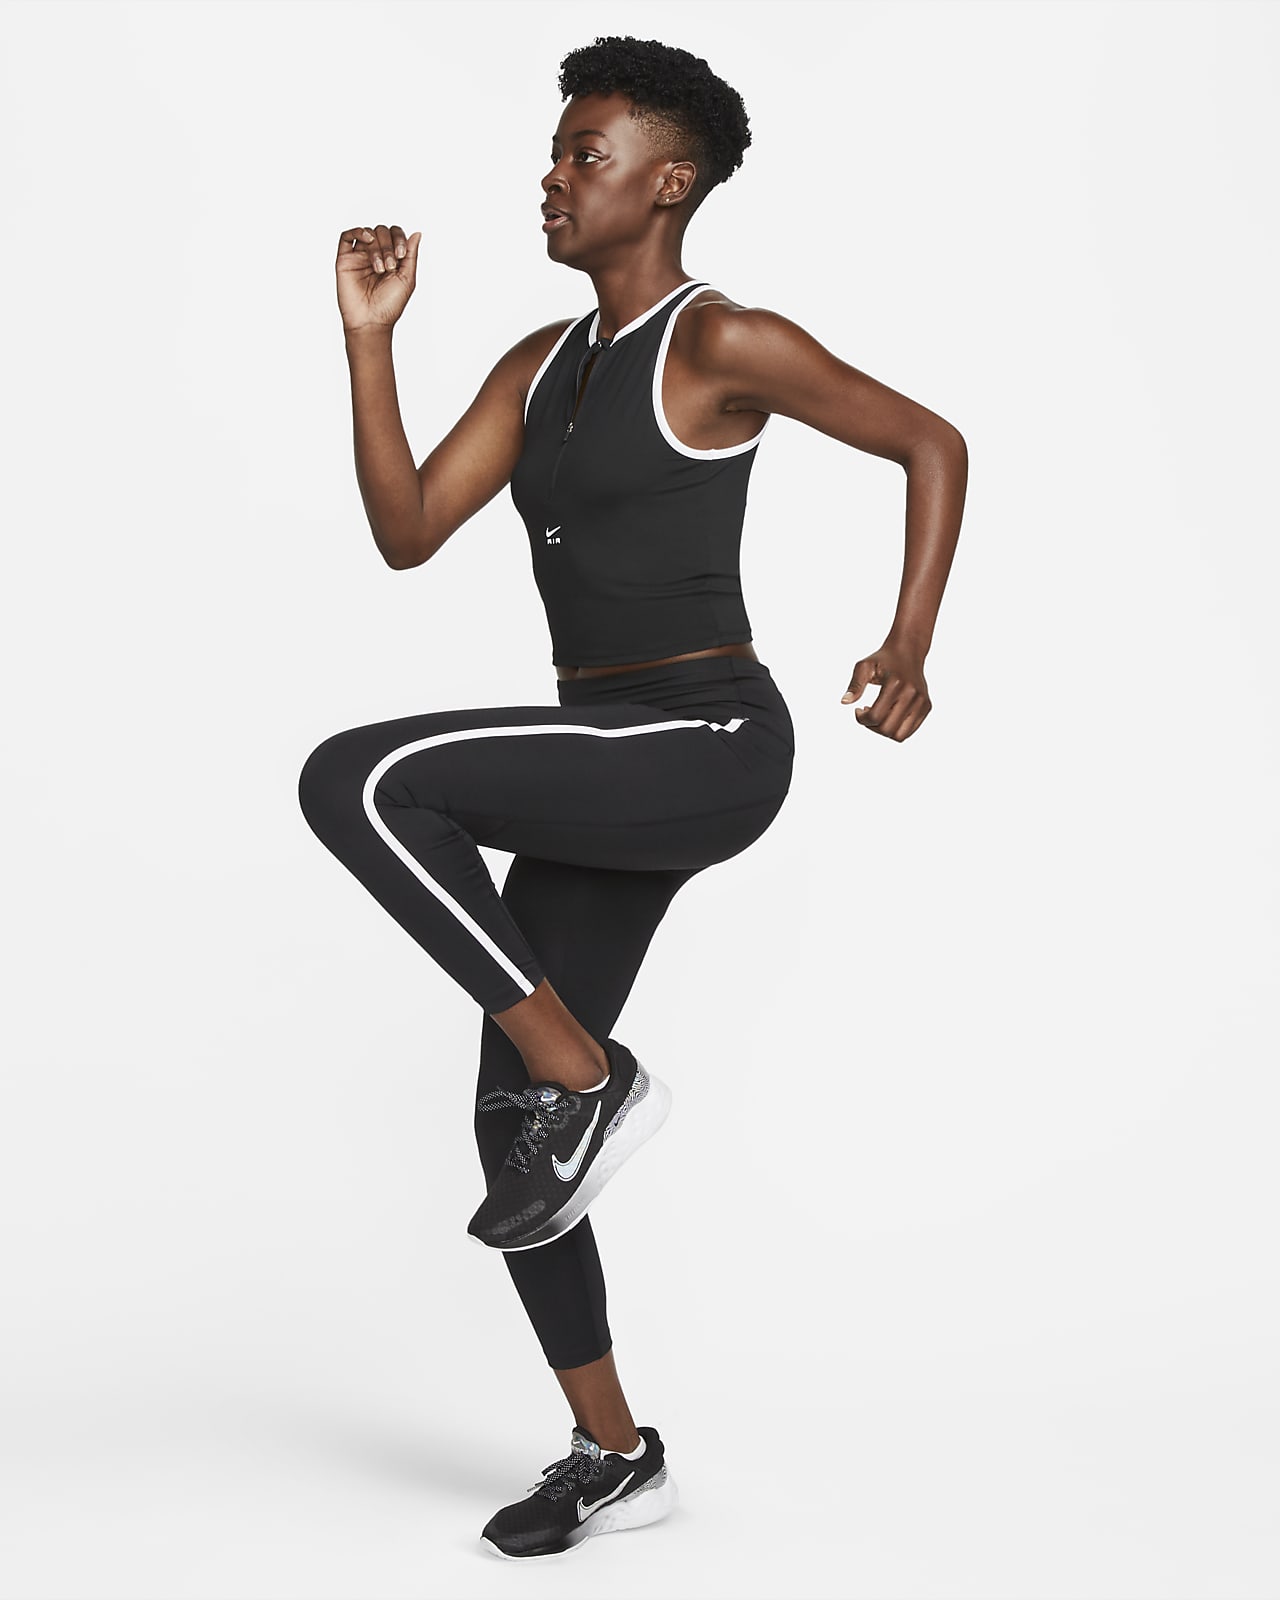 Nike Pro Women's Mid-Rise 7/8 Leggings with Pockets. Nike LU